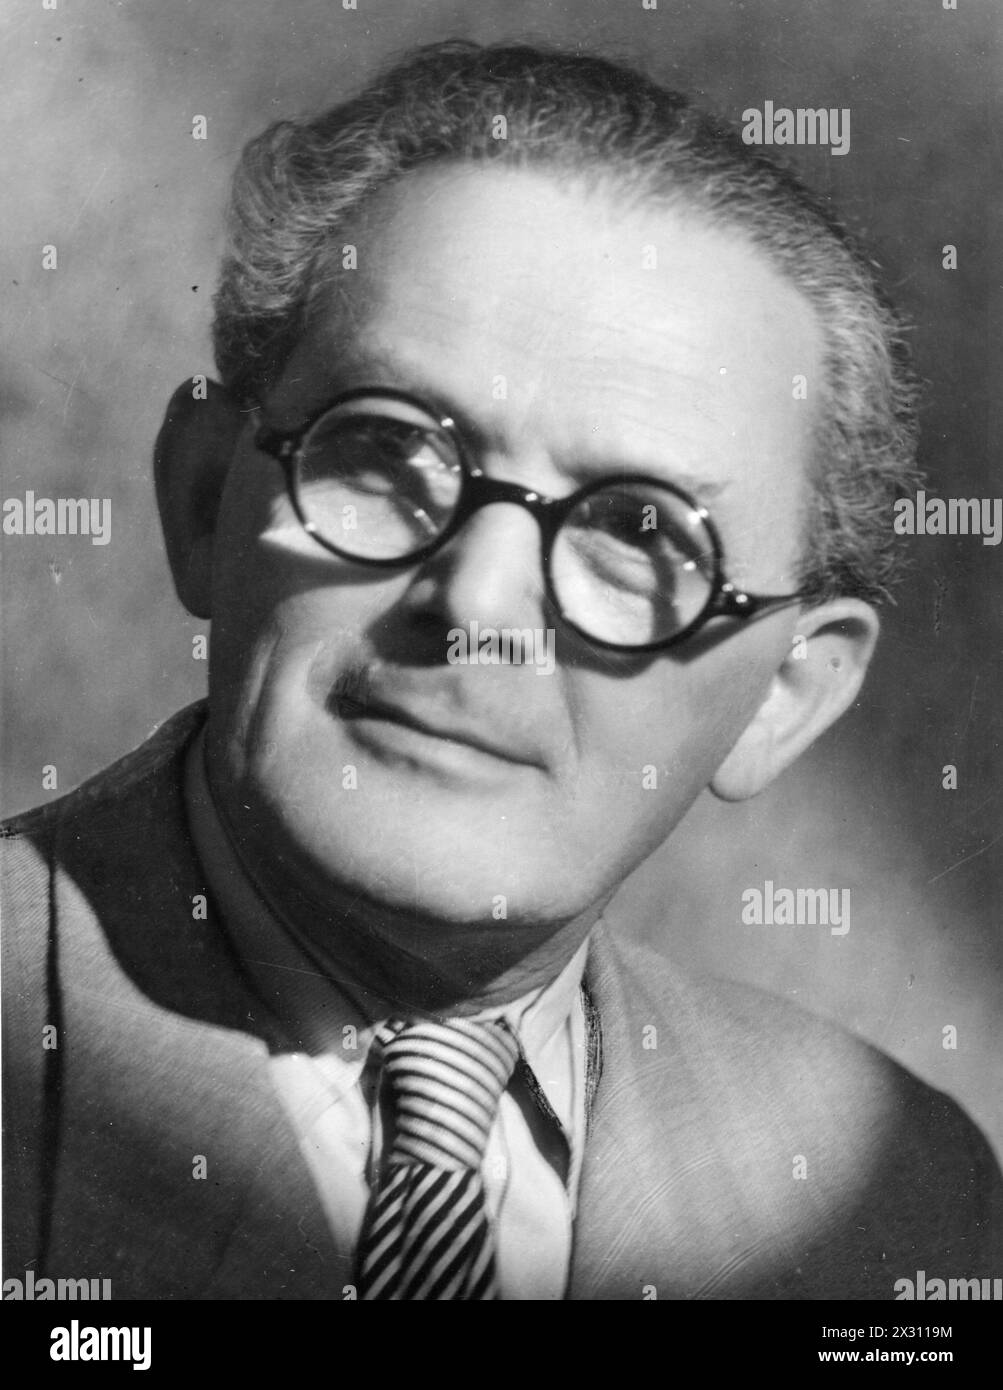 Szakasits, Arpad, 6.12.1888 - 3,5.1965, homme politique hongrois, vice-premier ministre 1945 - 1948, ADDITIONAL-RIGHTS-LEARANCE-INFO-NOT-AVAILABLE Banque D'Images